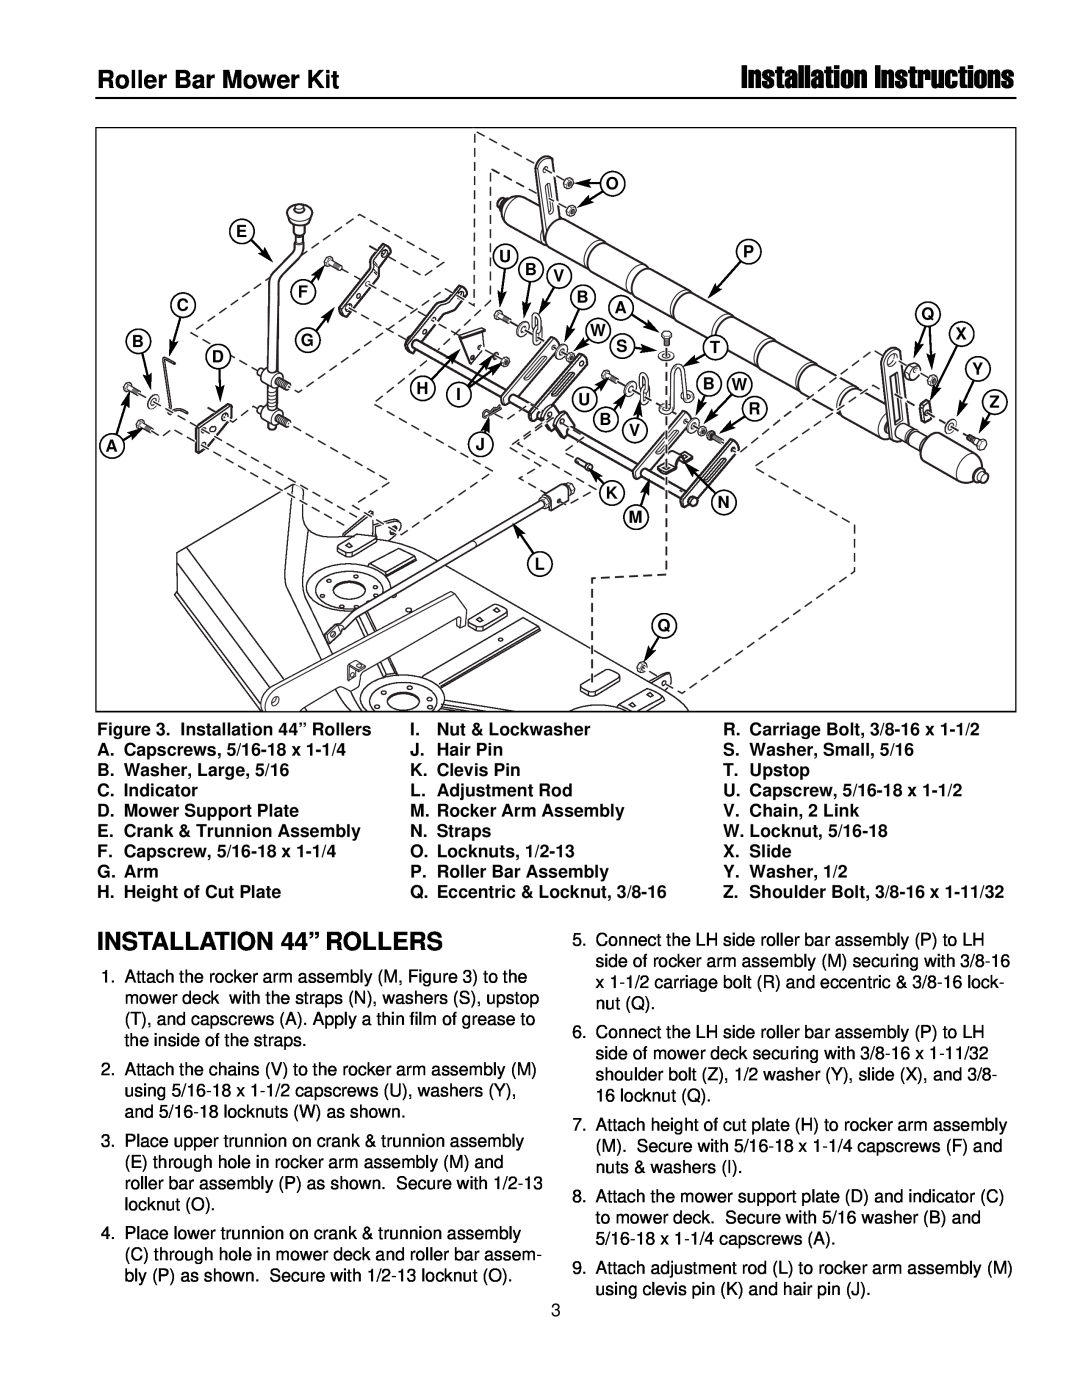 Briggs & Stratton 1687077 Installation Instructions, INSTALLATION 44” ROLLERS, Roller Bar Mower Kit 